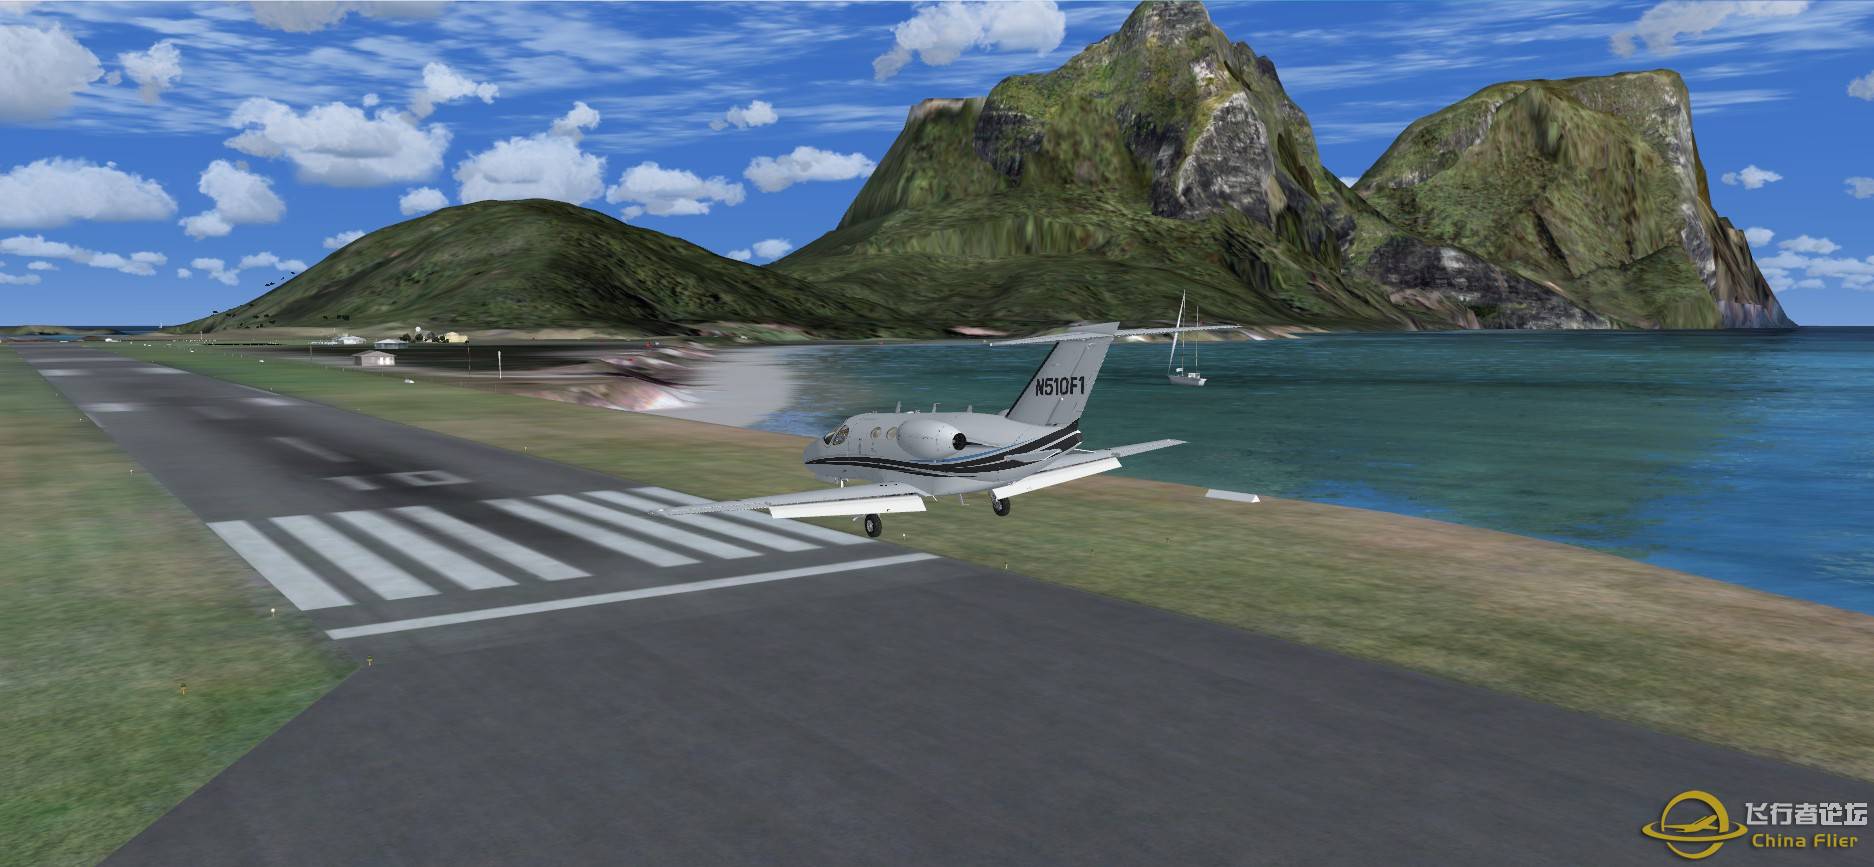 Aerosoft Lord Howe Island 紧邻澳洲的小岛-9162 